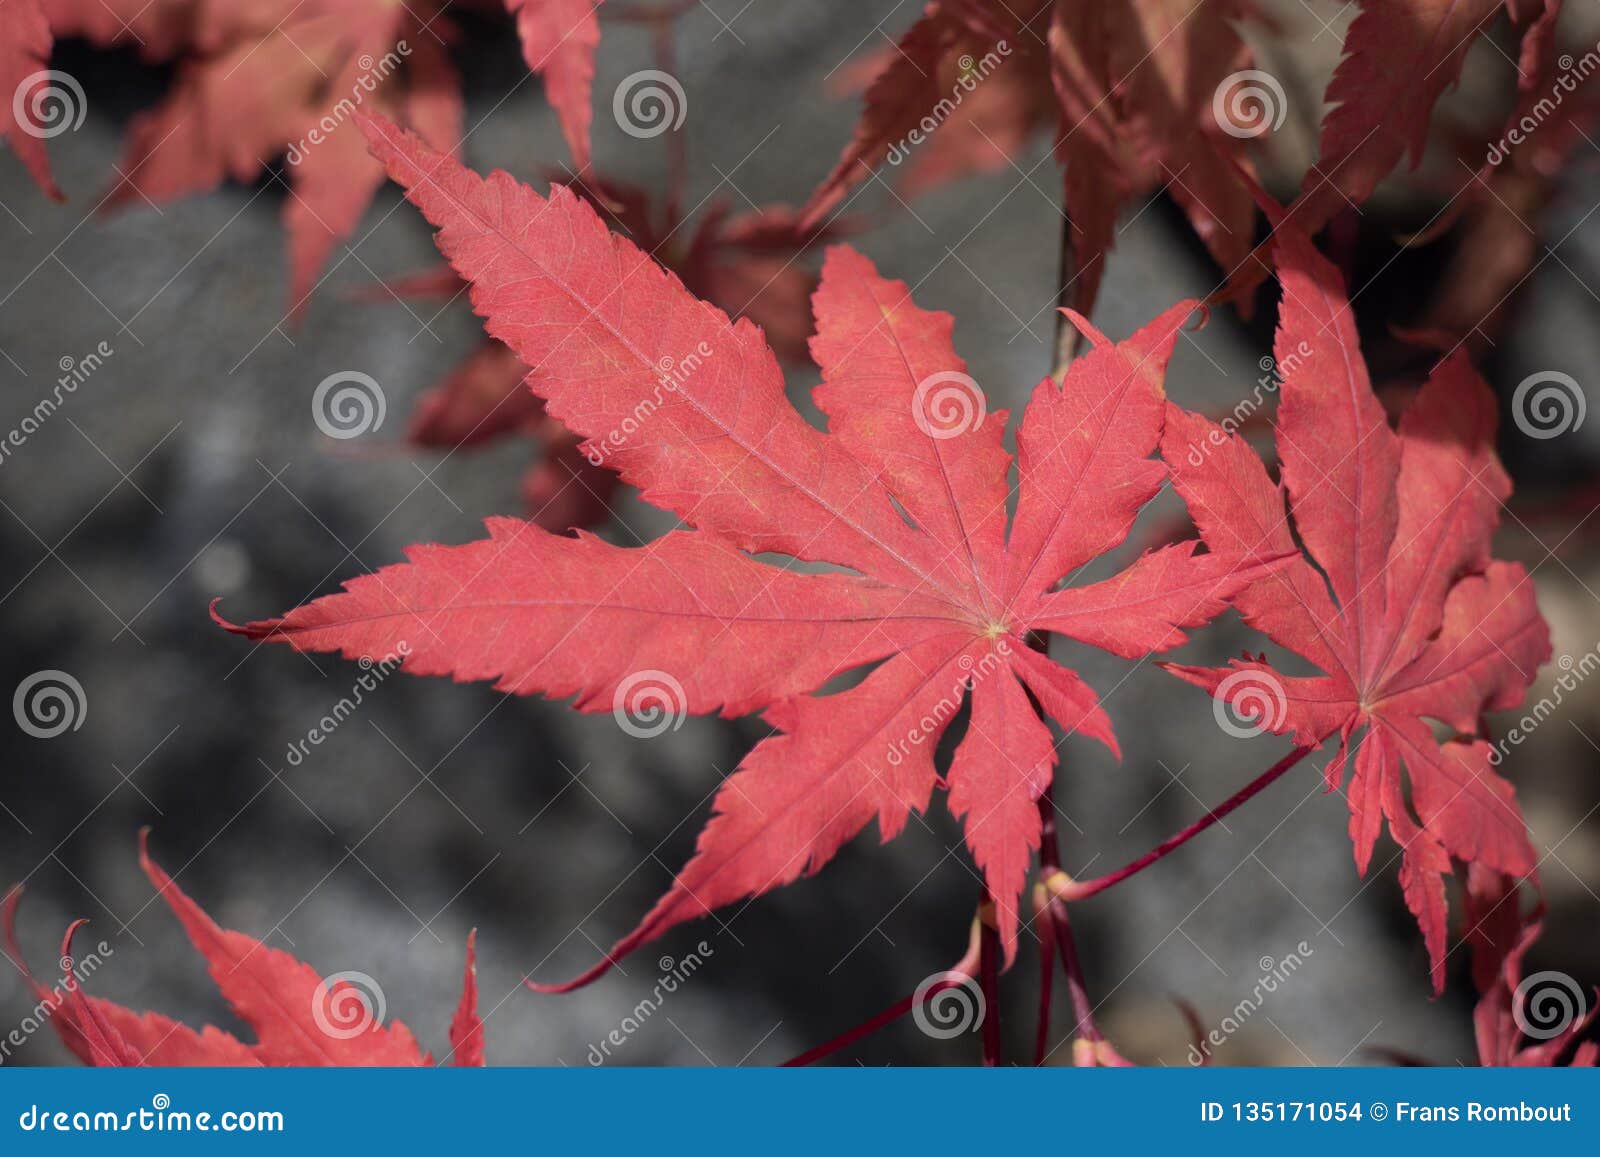 Red autumn acer leaf stock photo. Image of nature, foliage - 135171054